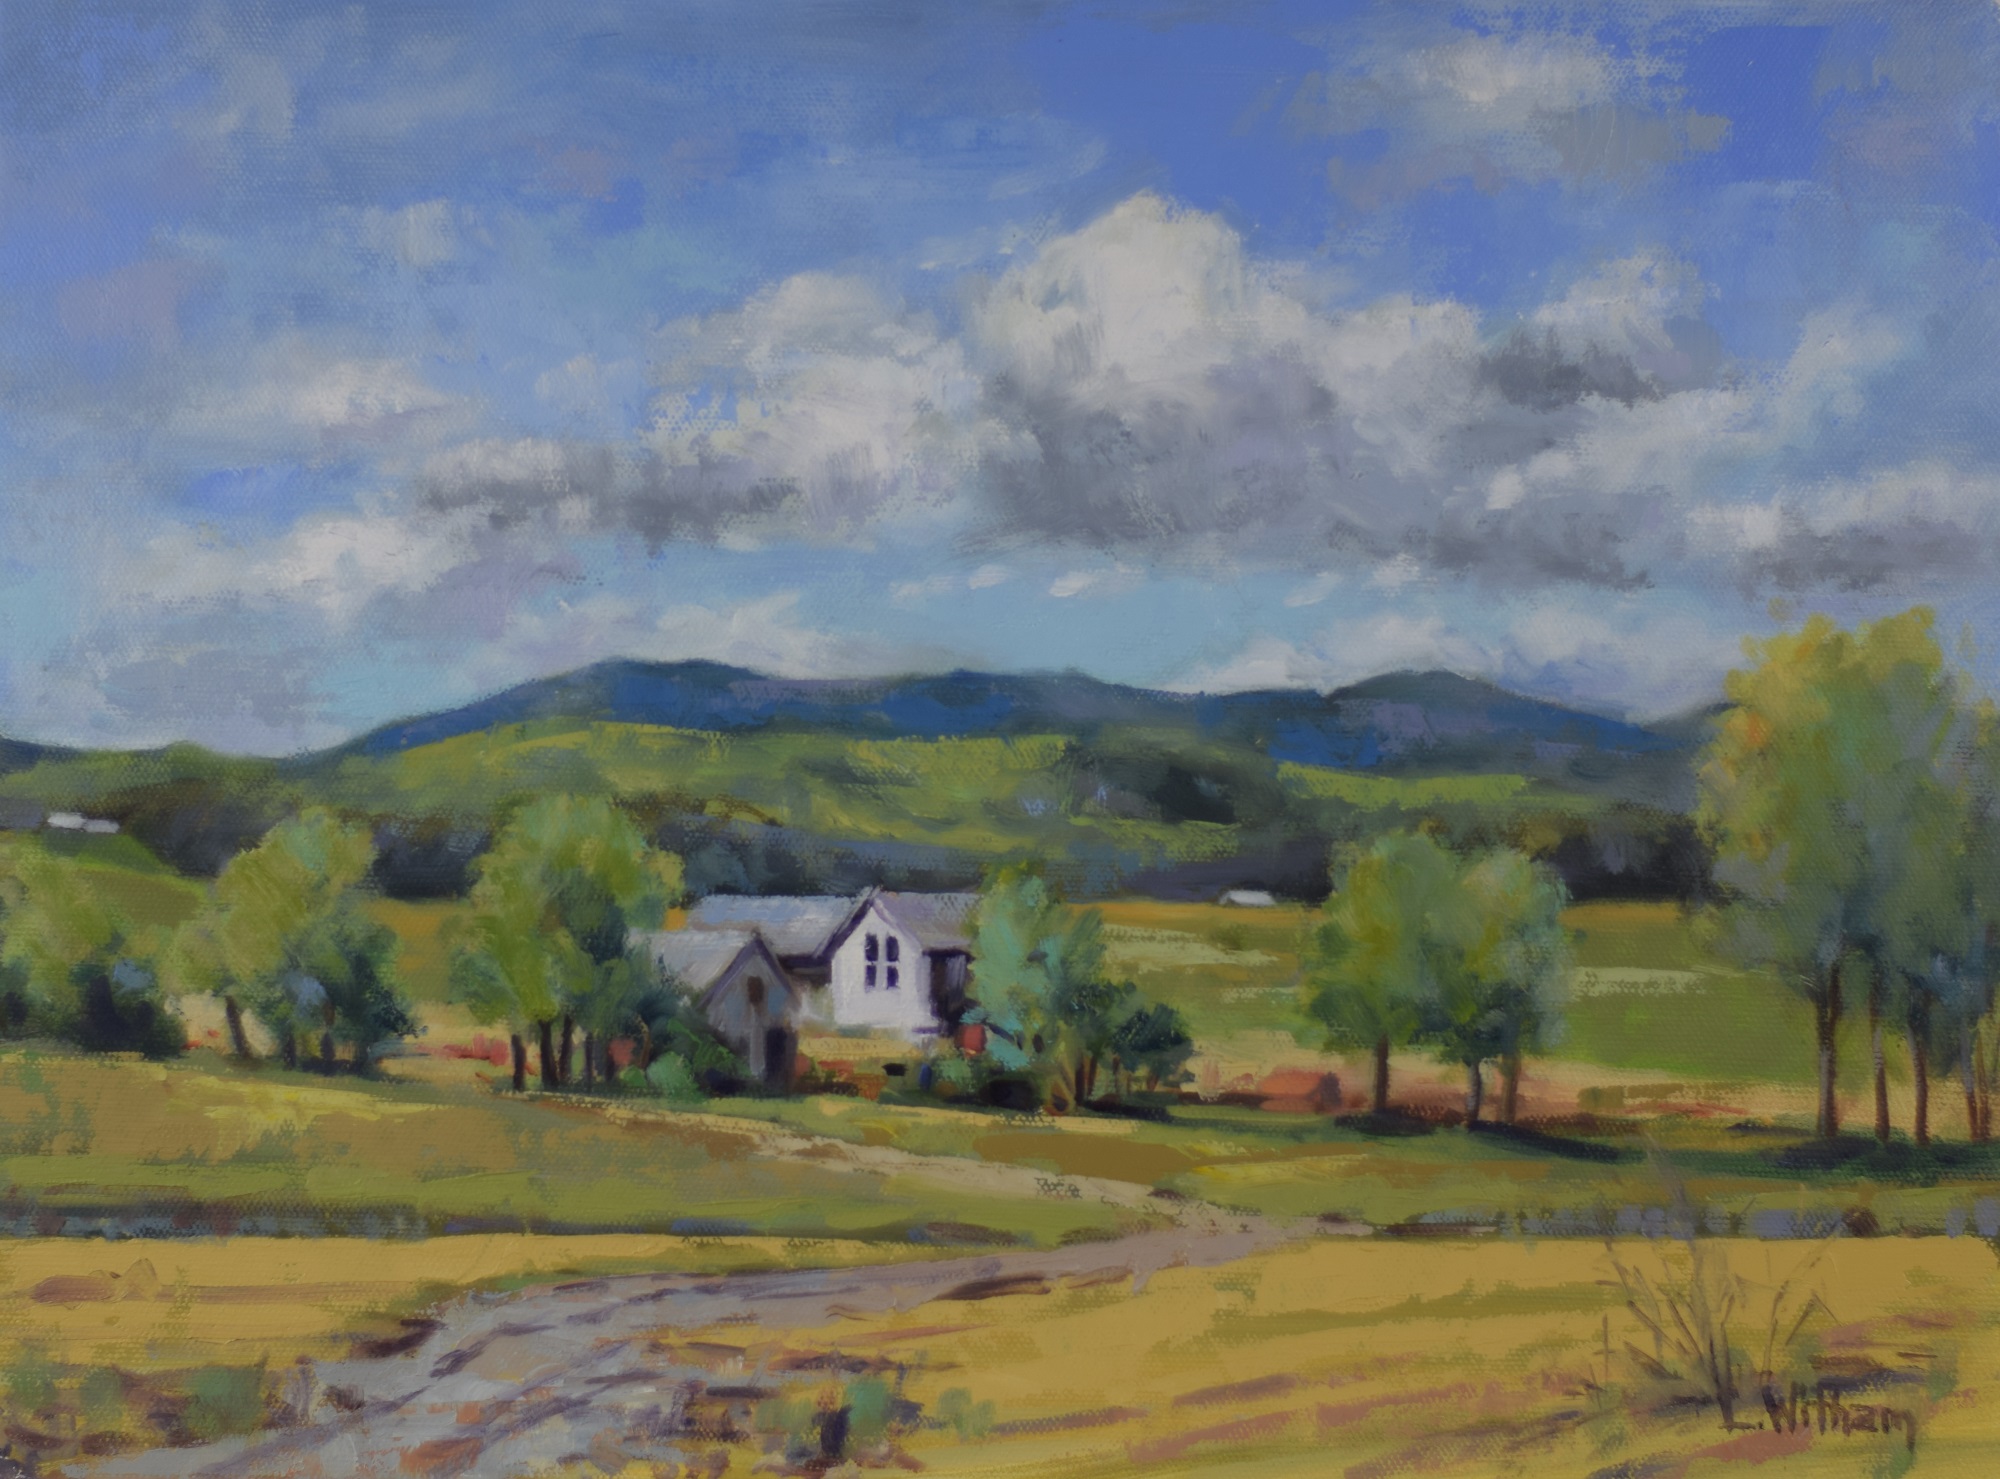 Carolina Skyline, Oil on canvas, 12x16